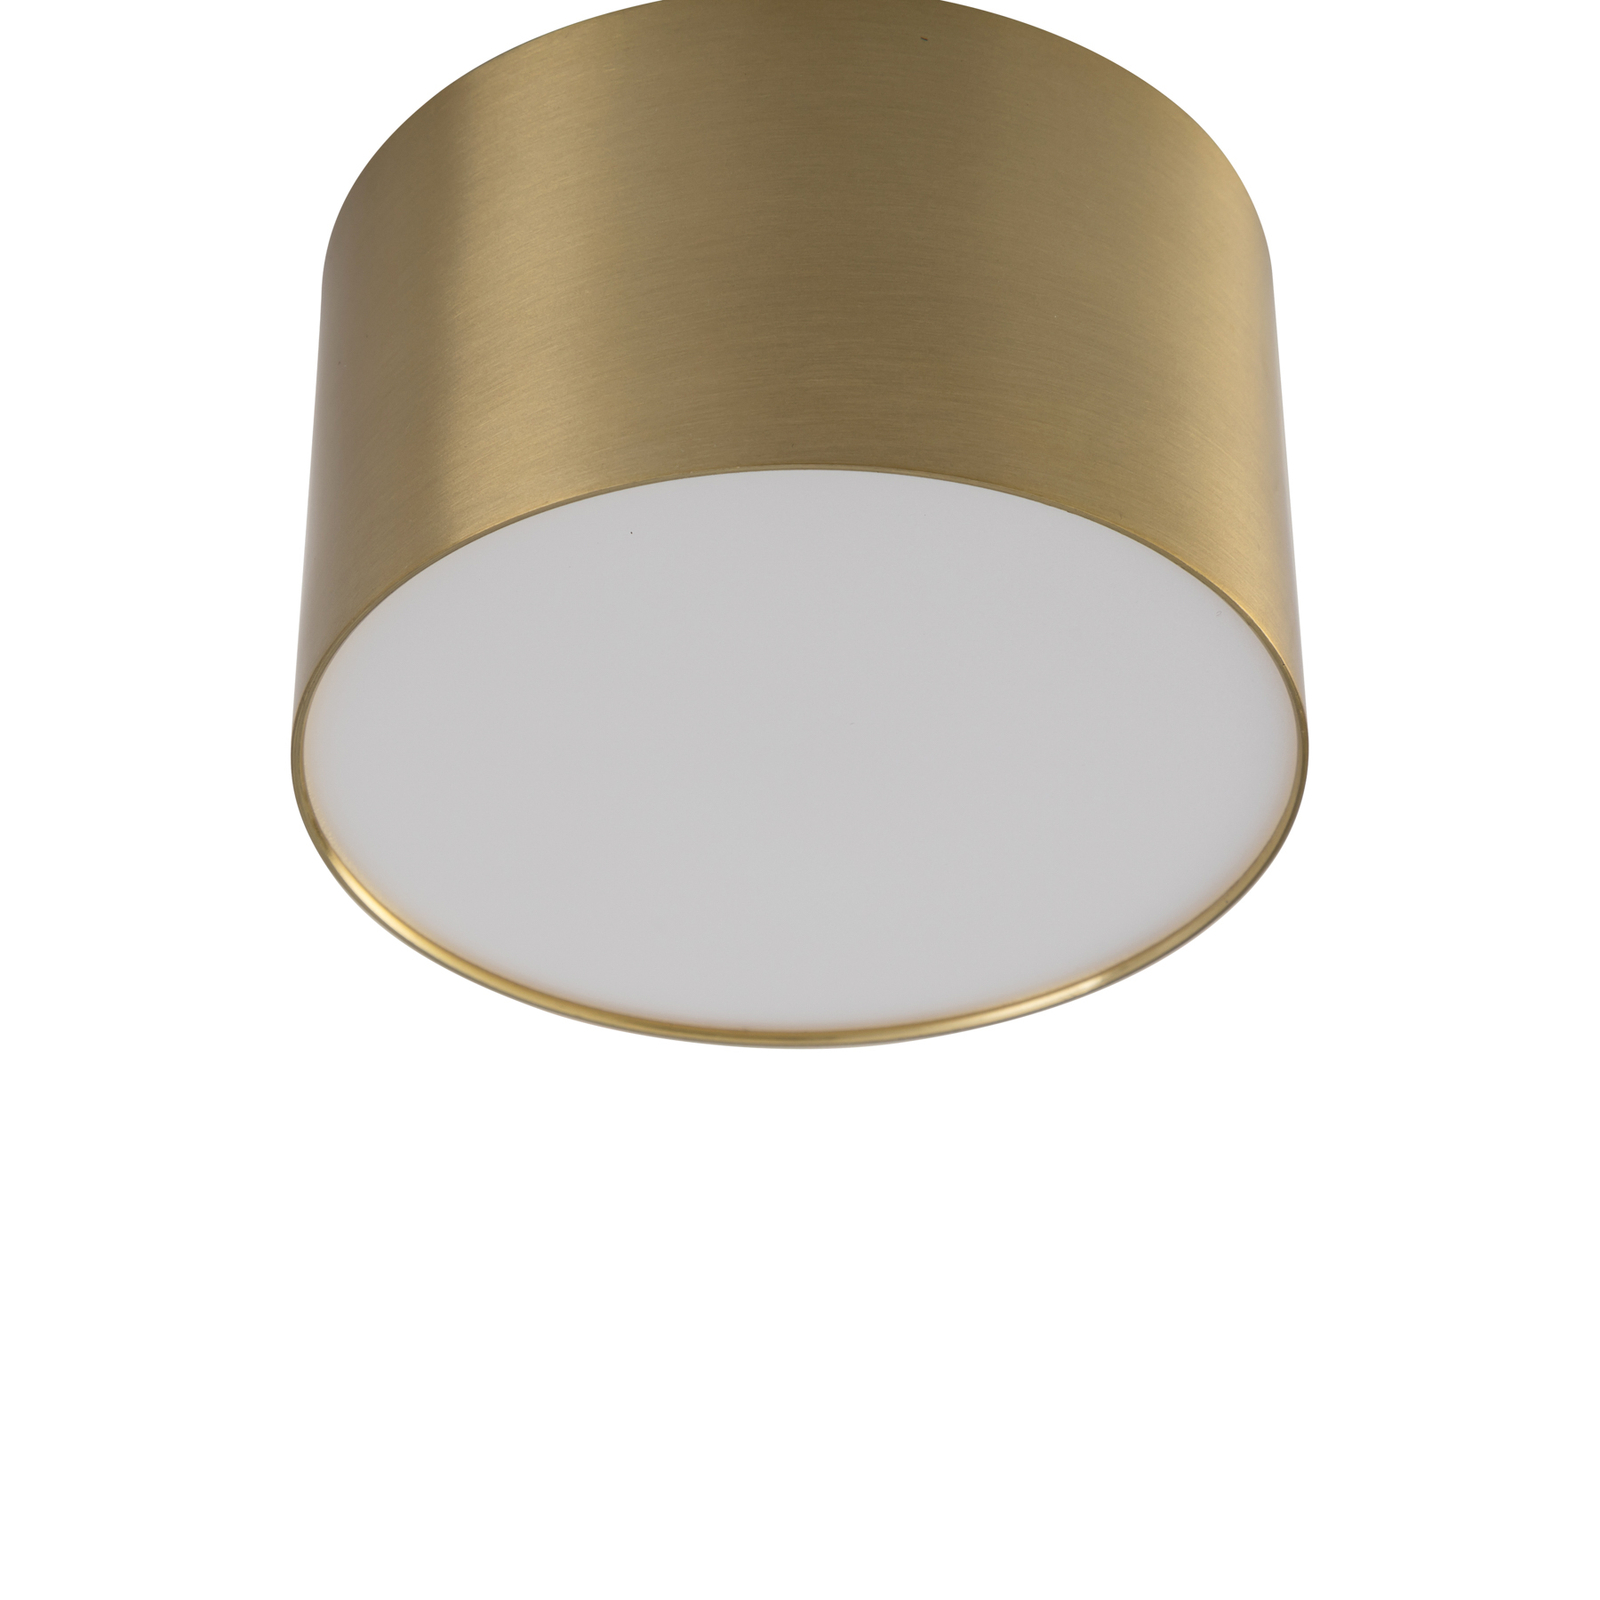 Lindby Nivoria LED-es reflektor, 11 x 6,5 cm, arany színű